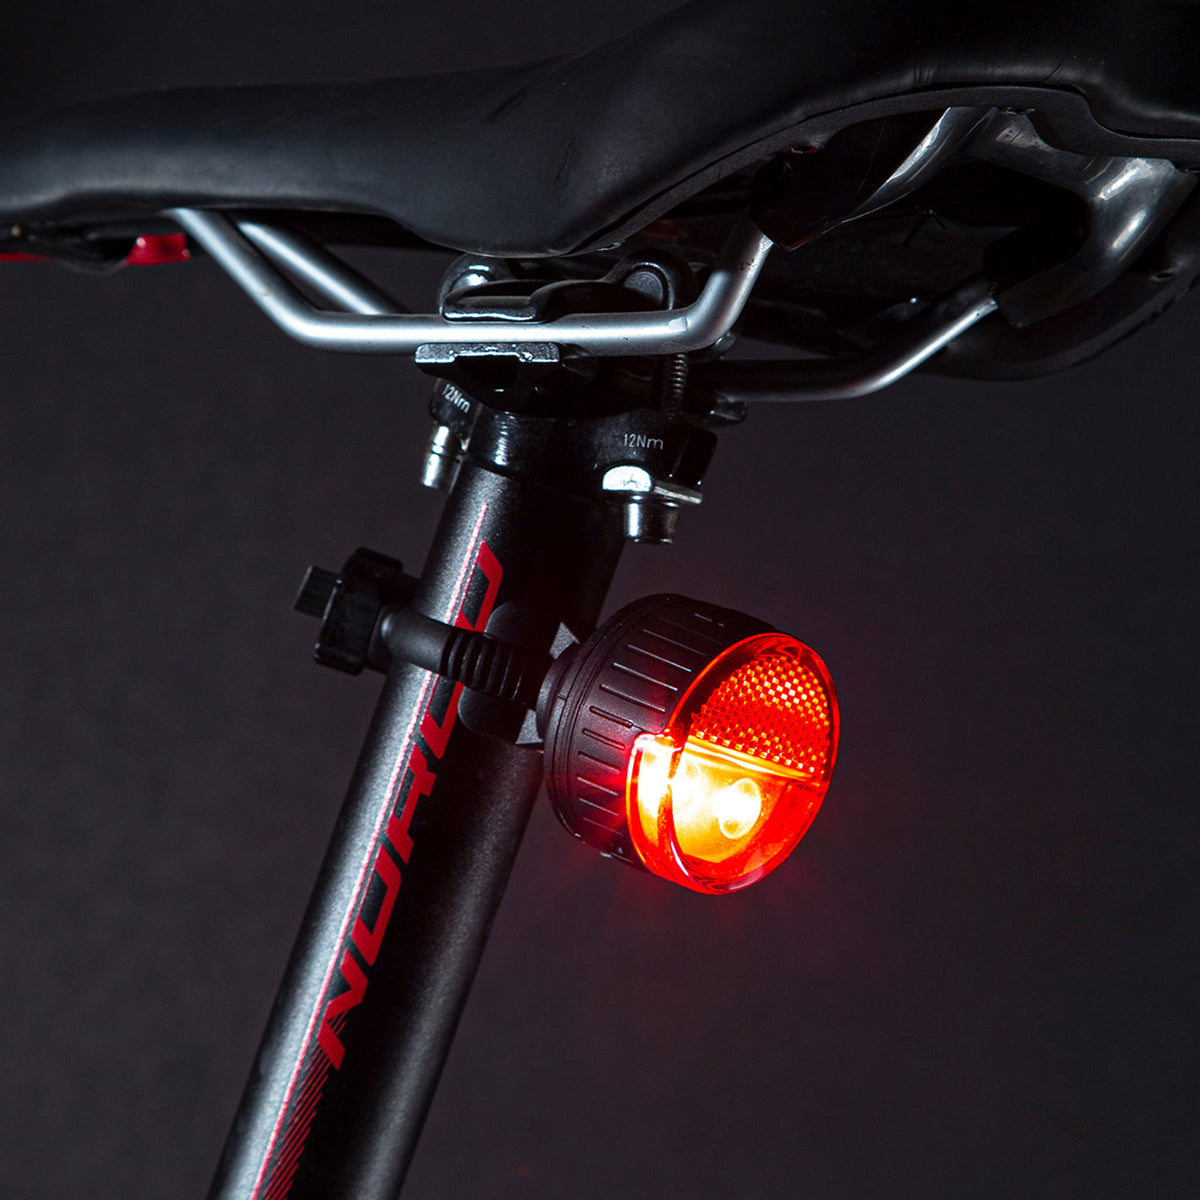 LED Bike Lights